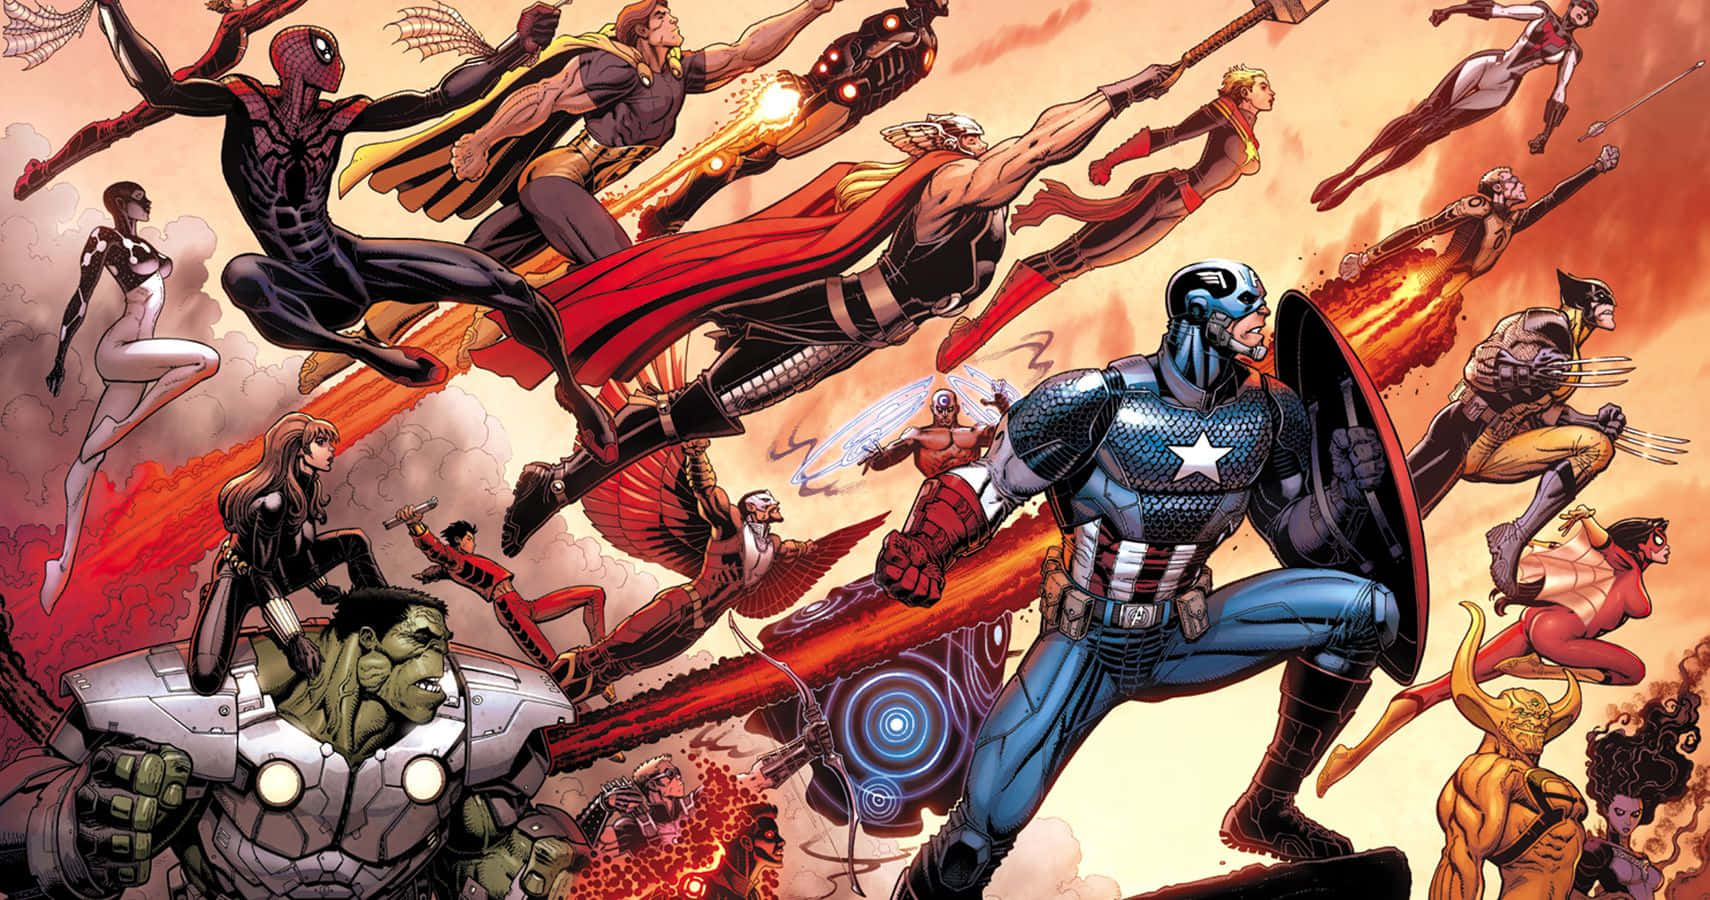 New Avengers team unites in action-packed wallpaper Wallpaper